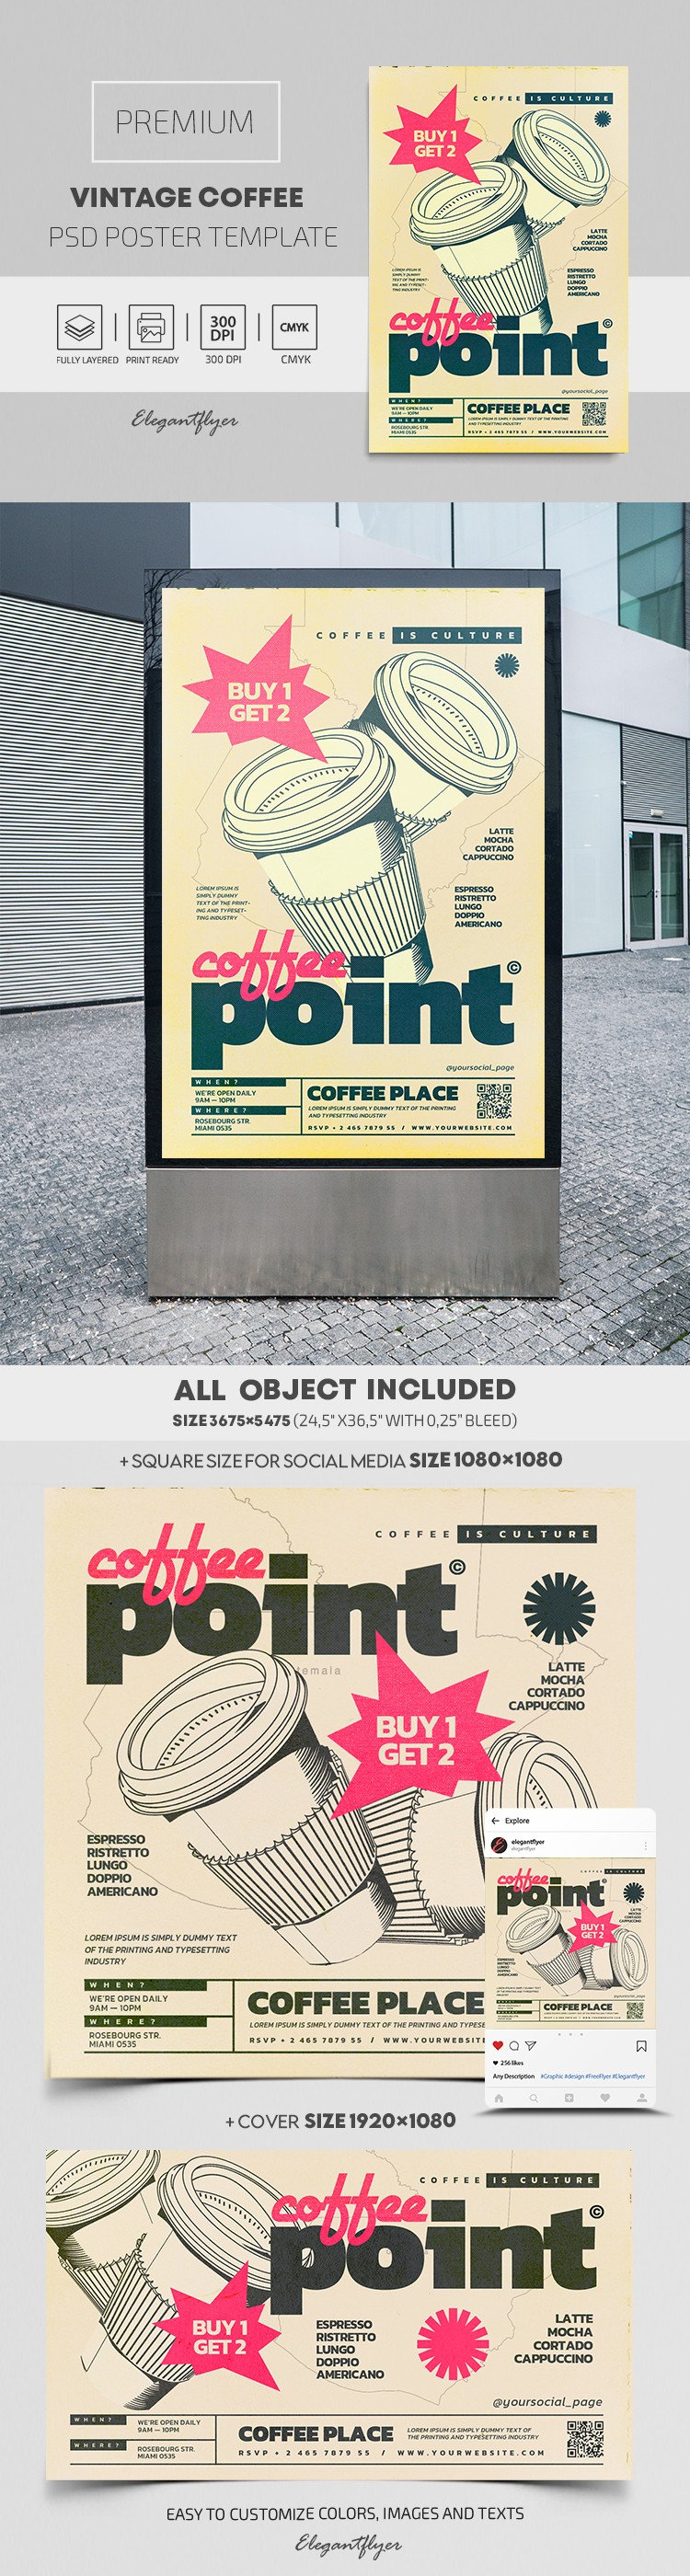 Plakat Vintage Coffee by ElegantFlyer